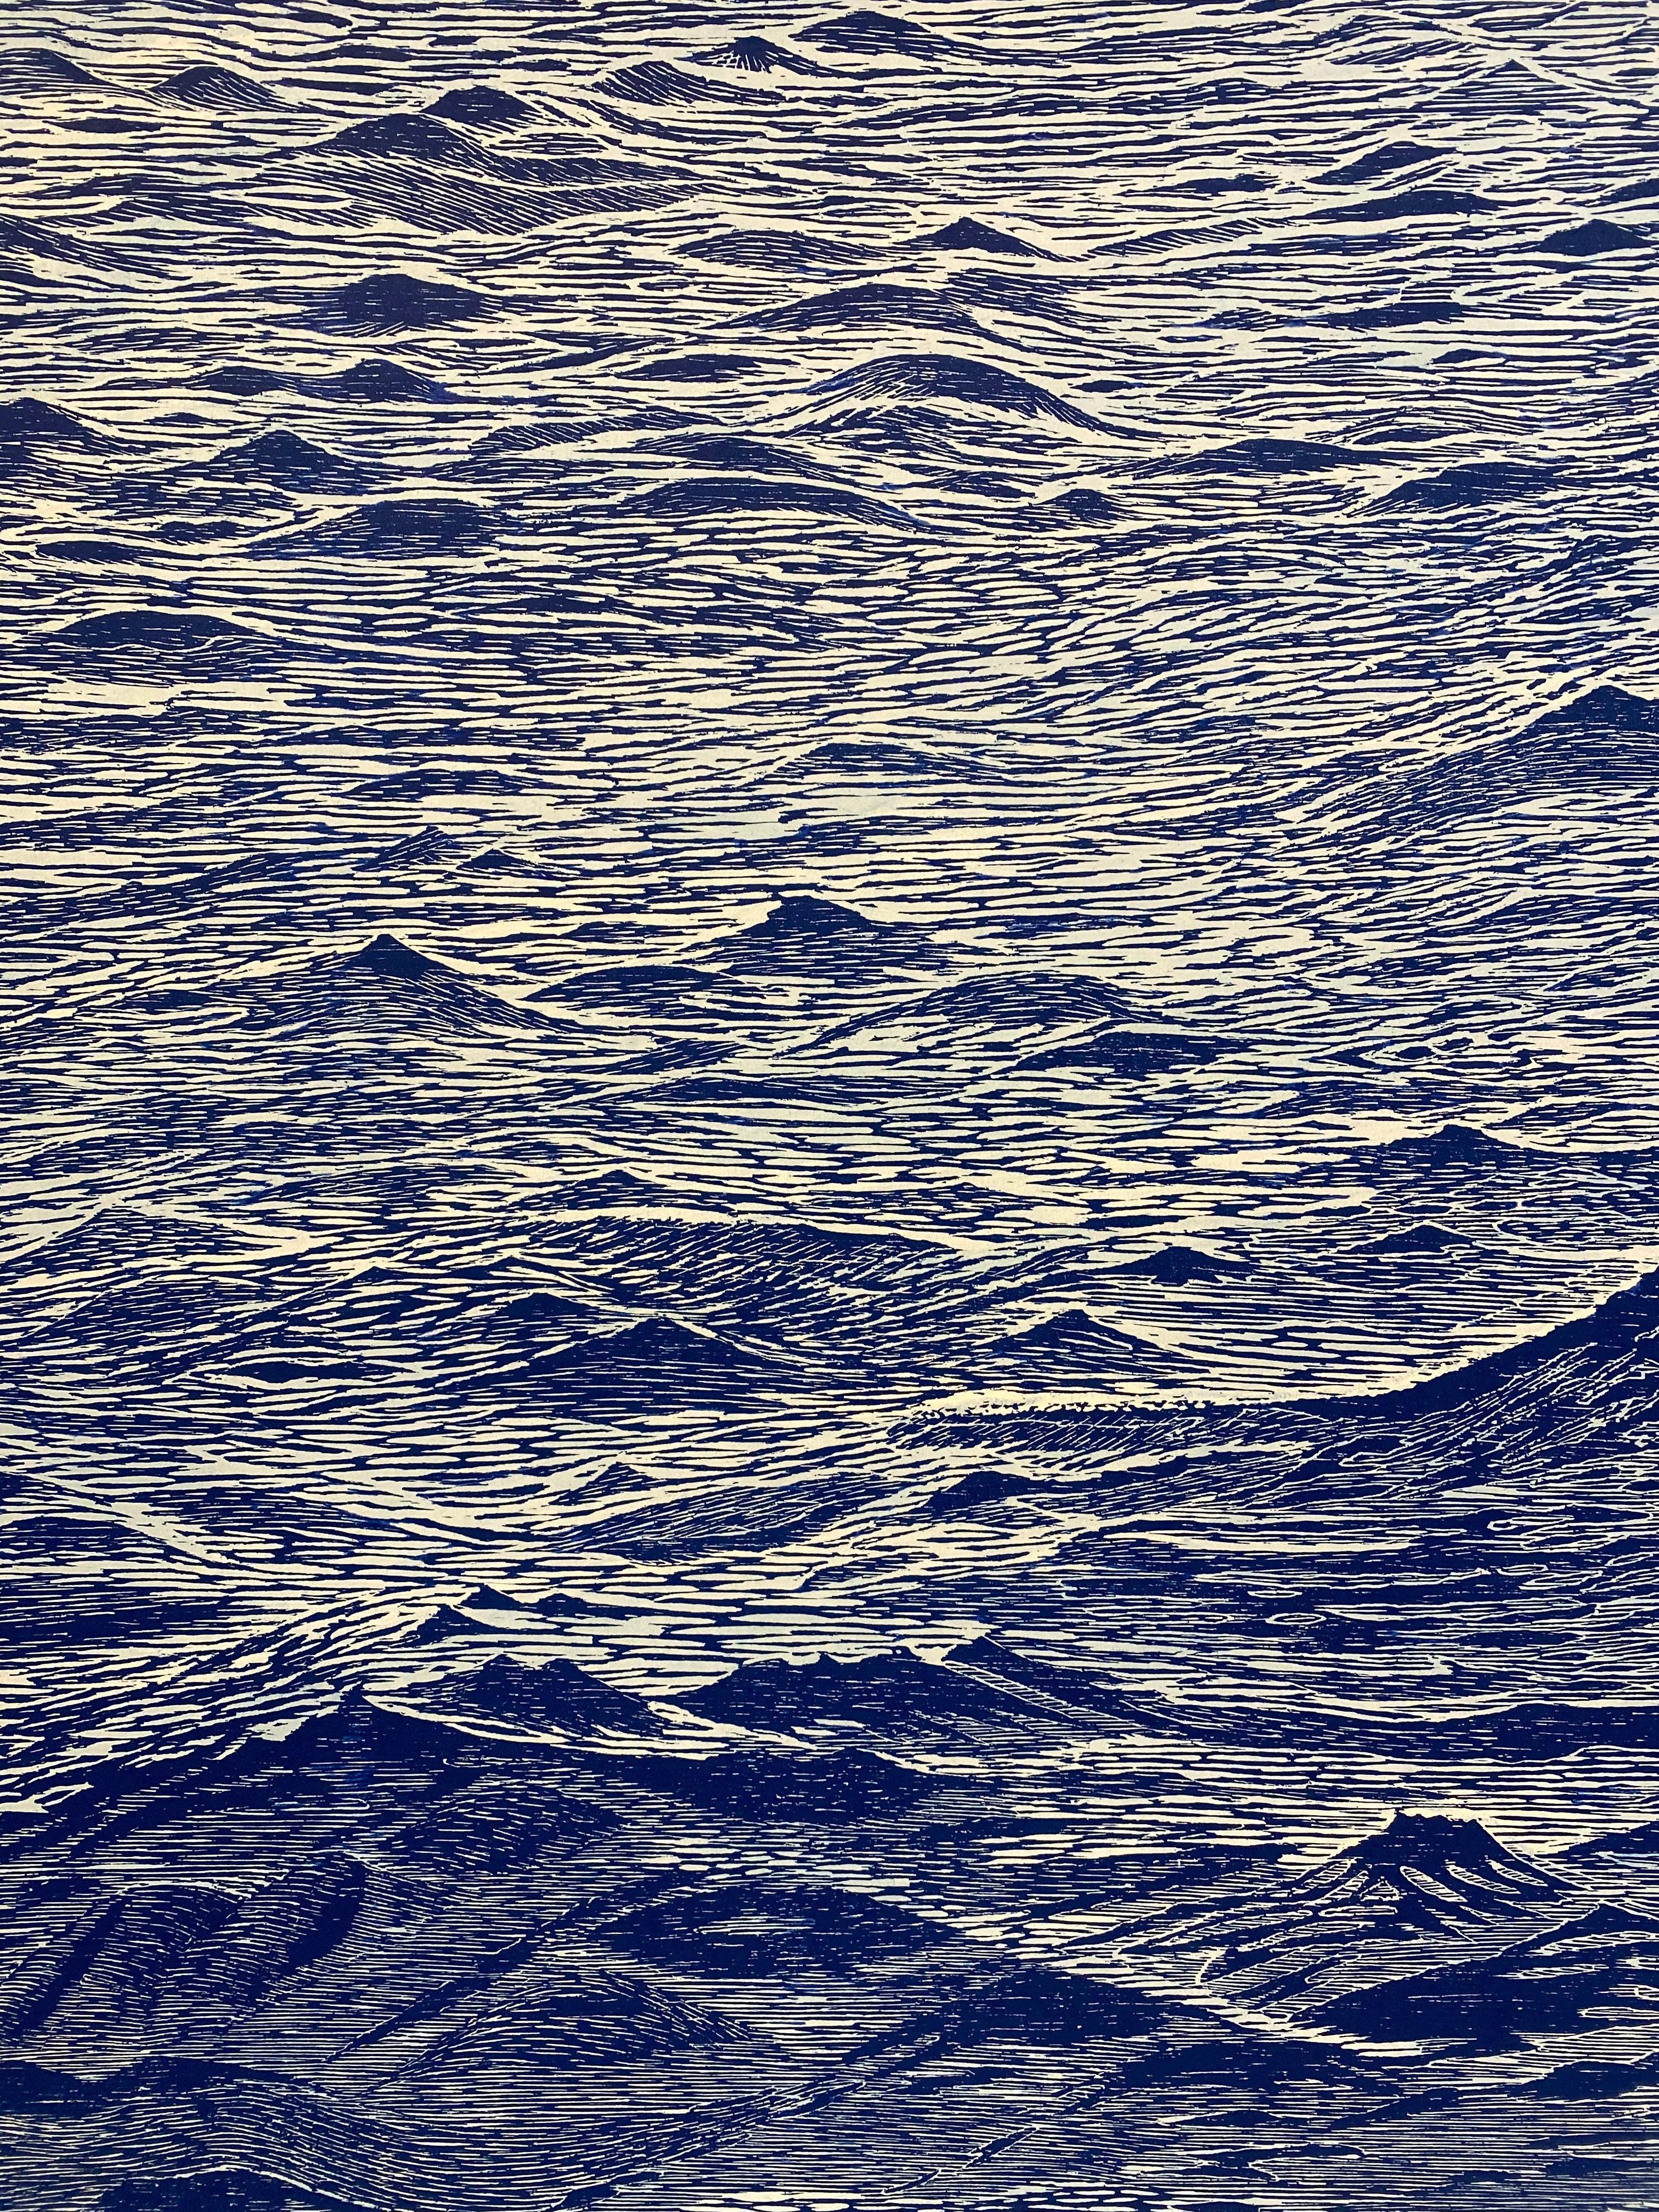 Seascape 24, Woodcut Print of Ocean Waves in Light Blue and Dark Cobalt, Navy 8